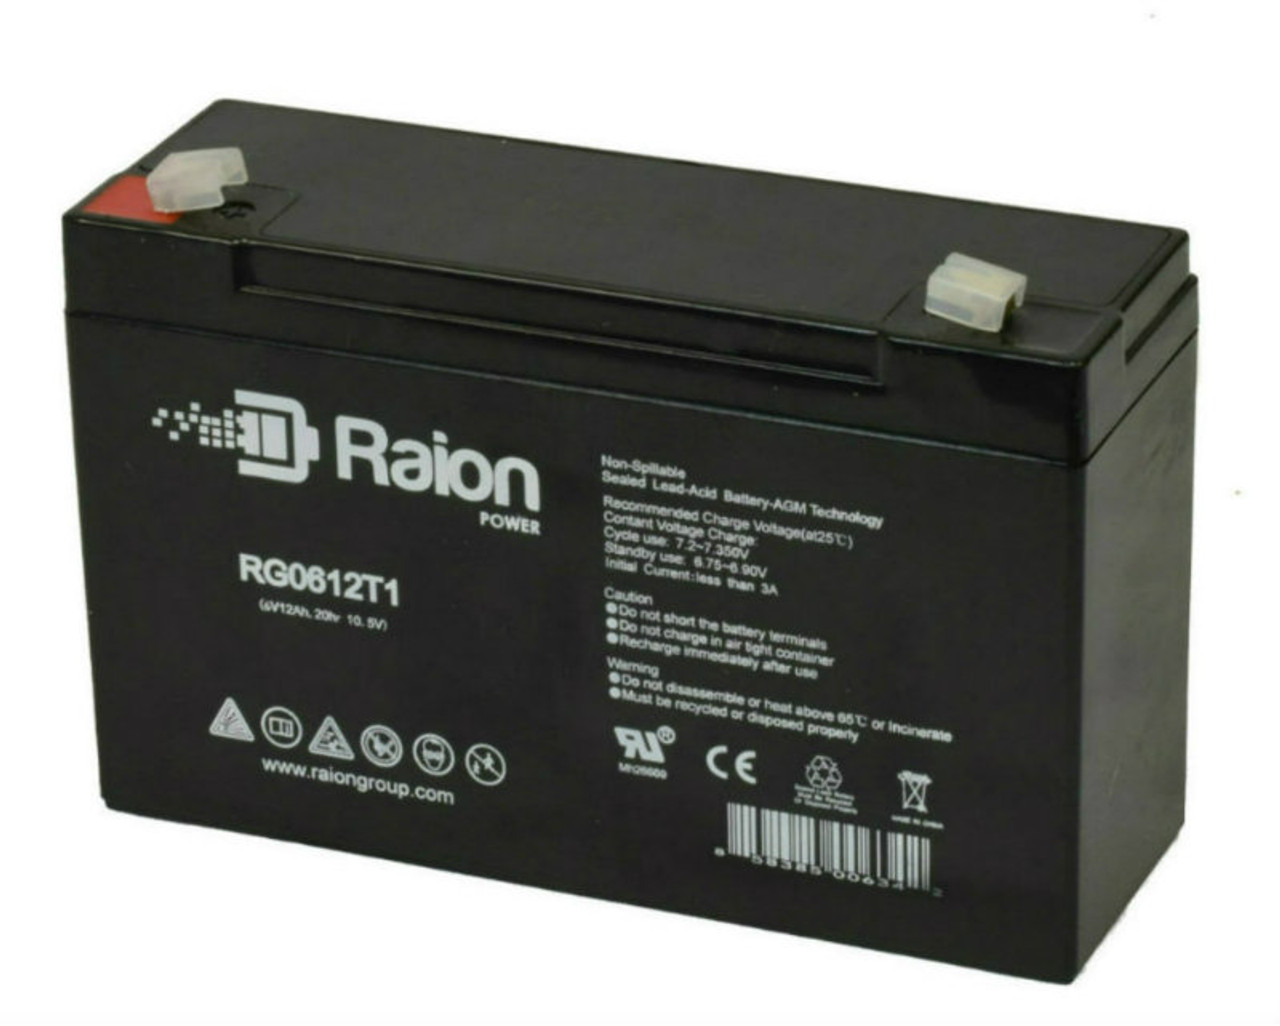 Raion Power RG06120T1 Replacement Emergency Light Battery for York-Wide Light D2E1